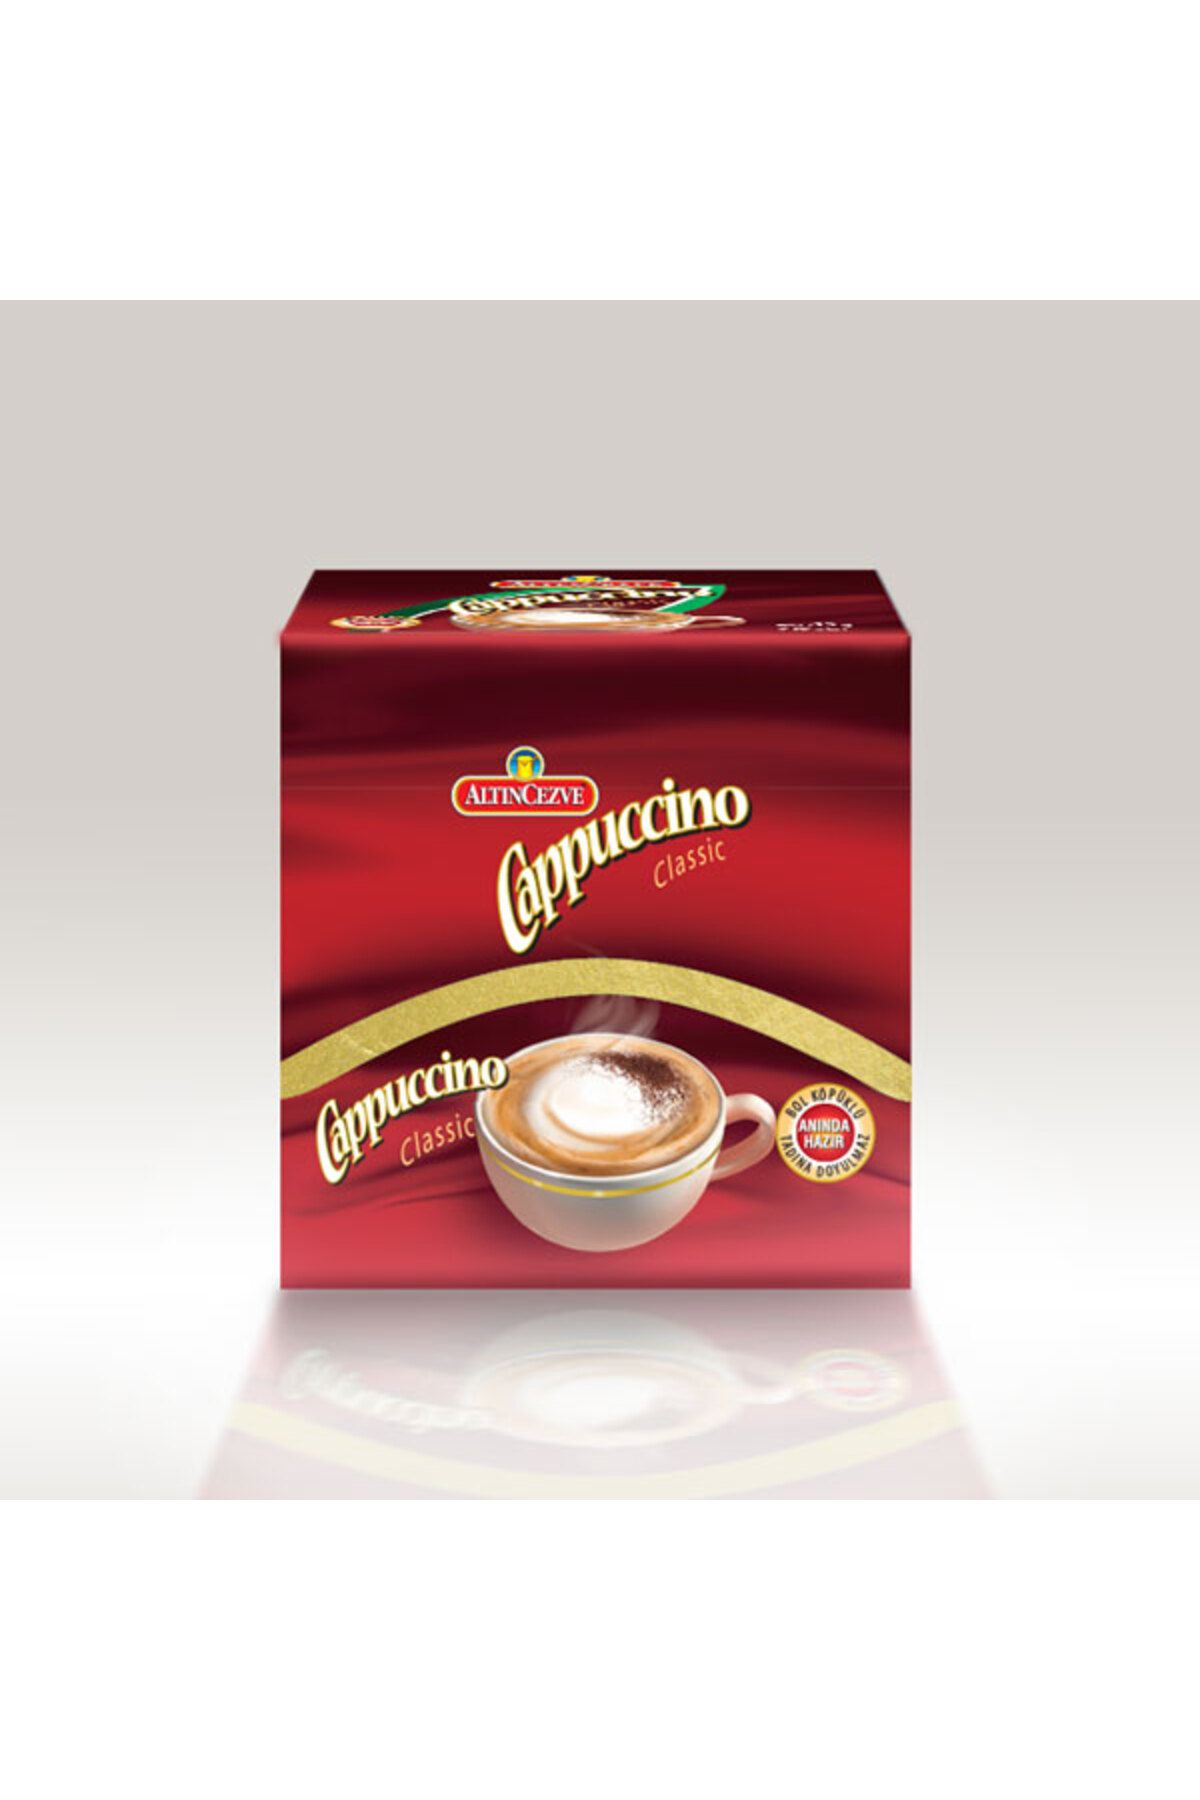 Altıncezve Tek Içimlik Cappuccino Classic 20 X 15 G